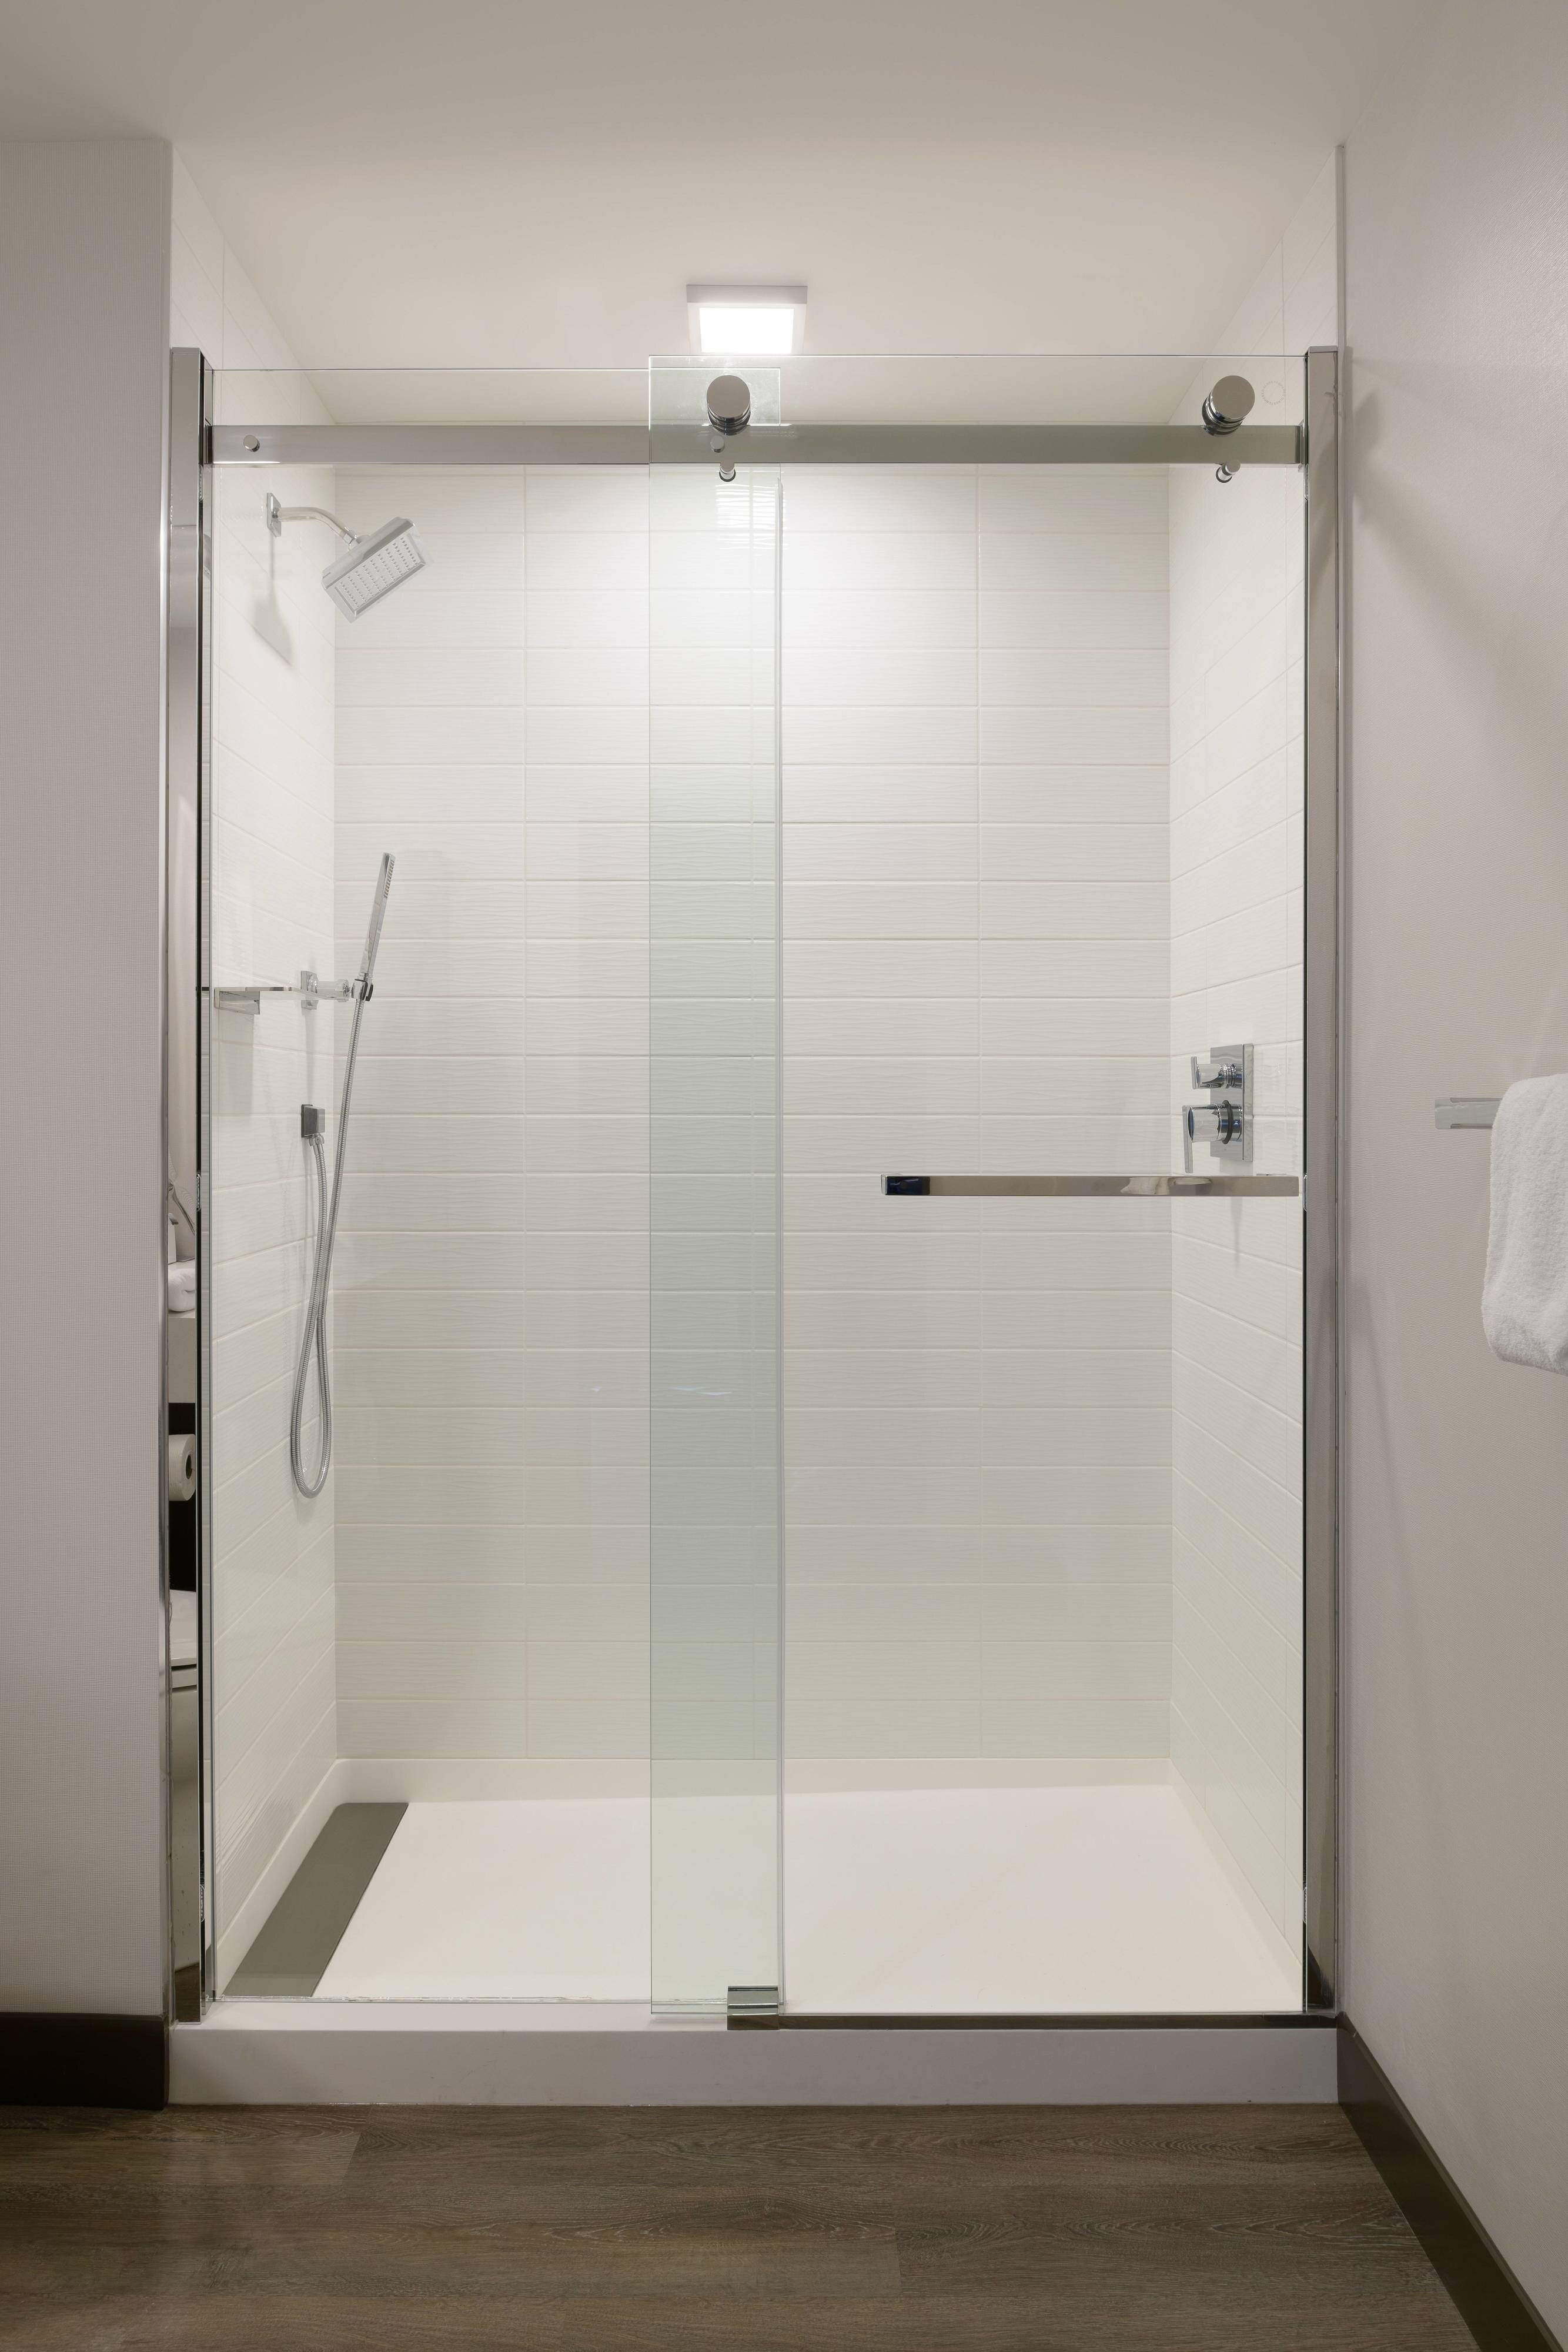 Executive Corner Suite Bathroom - Walk-In Shower